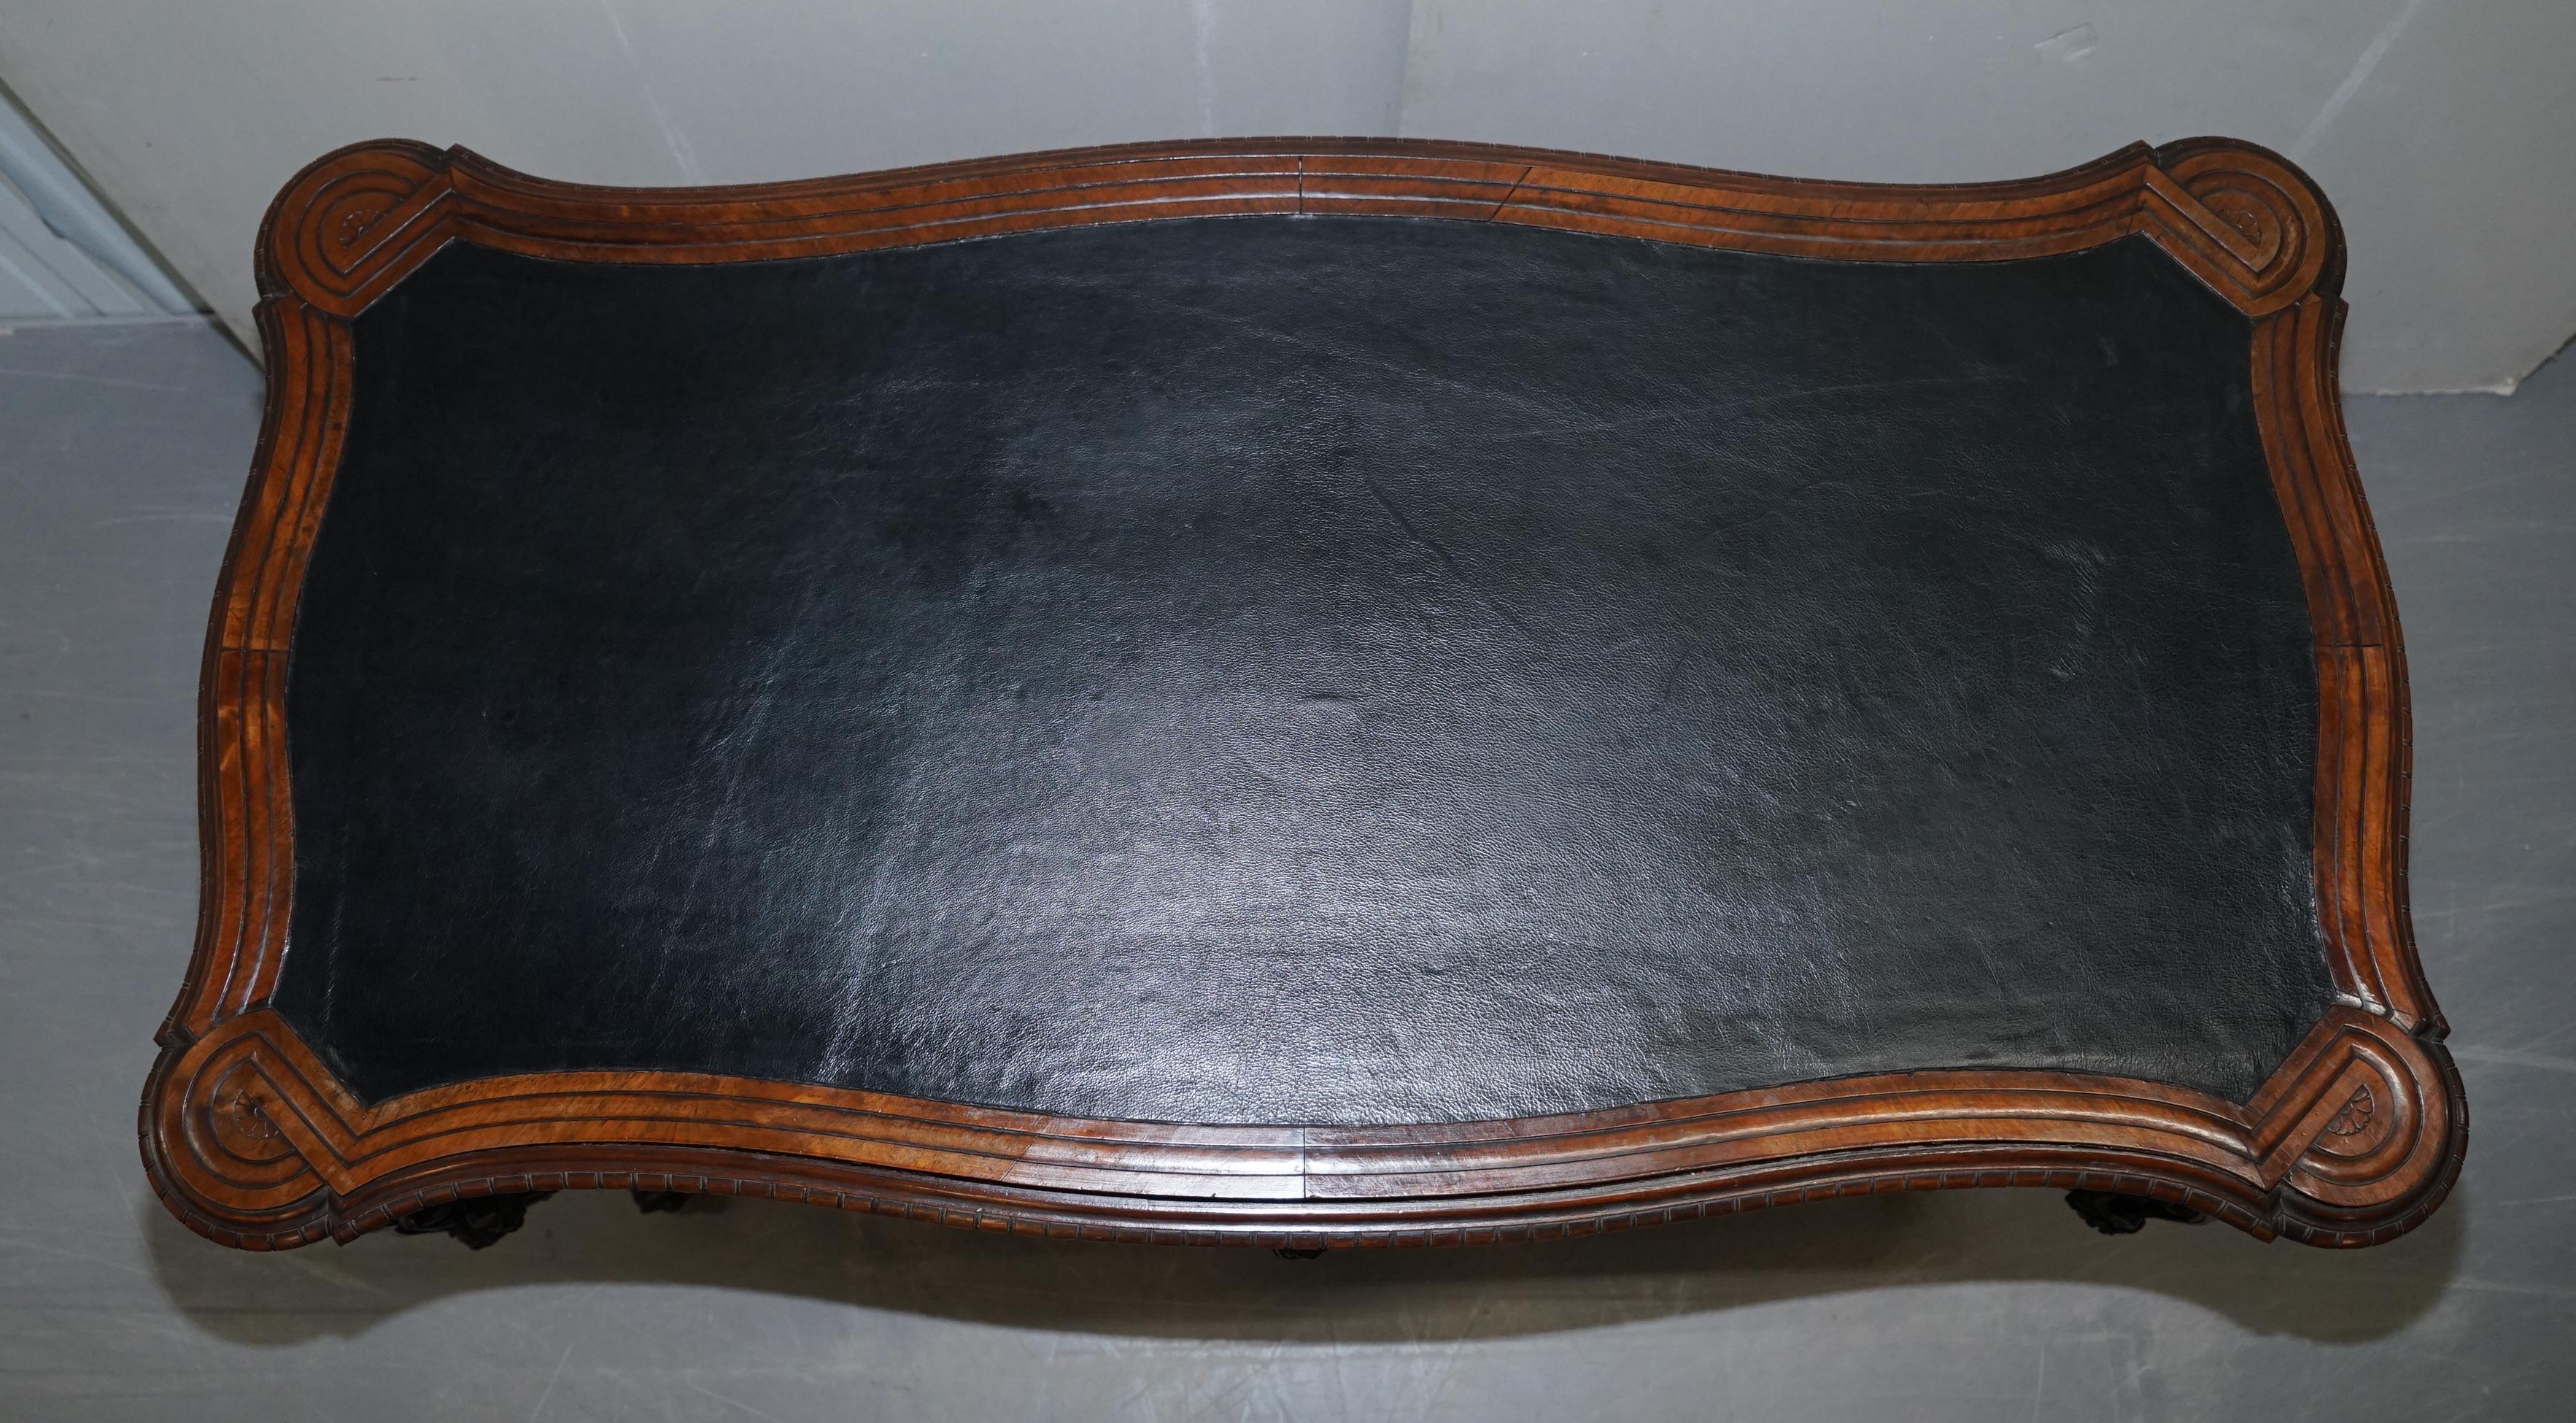 Hand-Crafted Important Italian Angiolo Barbetti Firenze Antique Cherub Desk Library Table For Sale